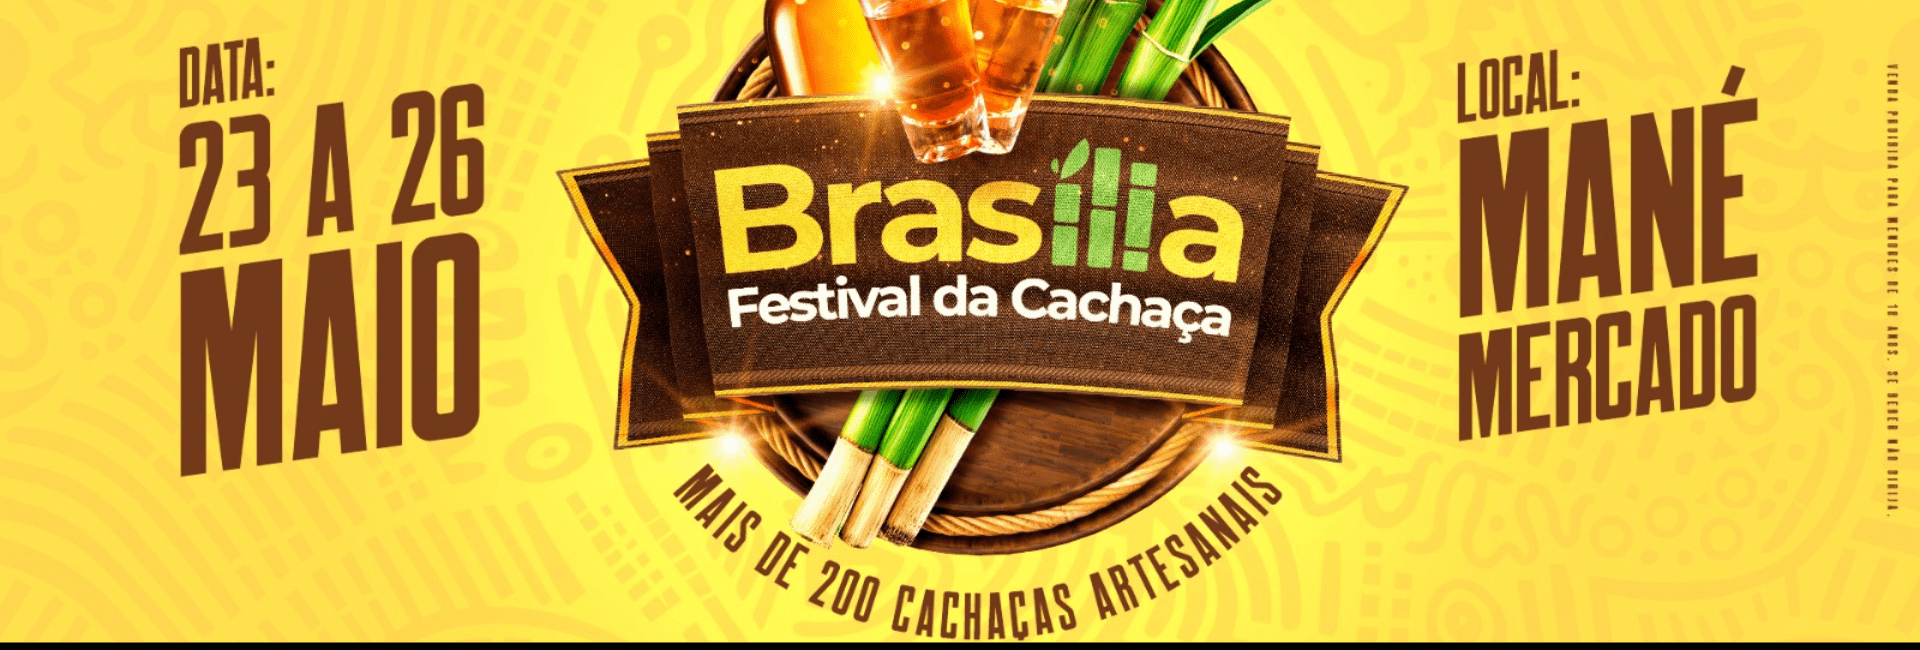 Brasília festival da cachaça